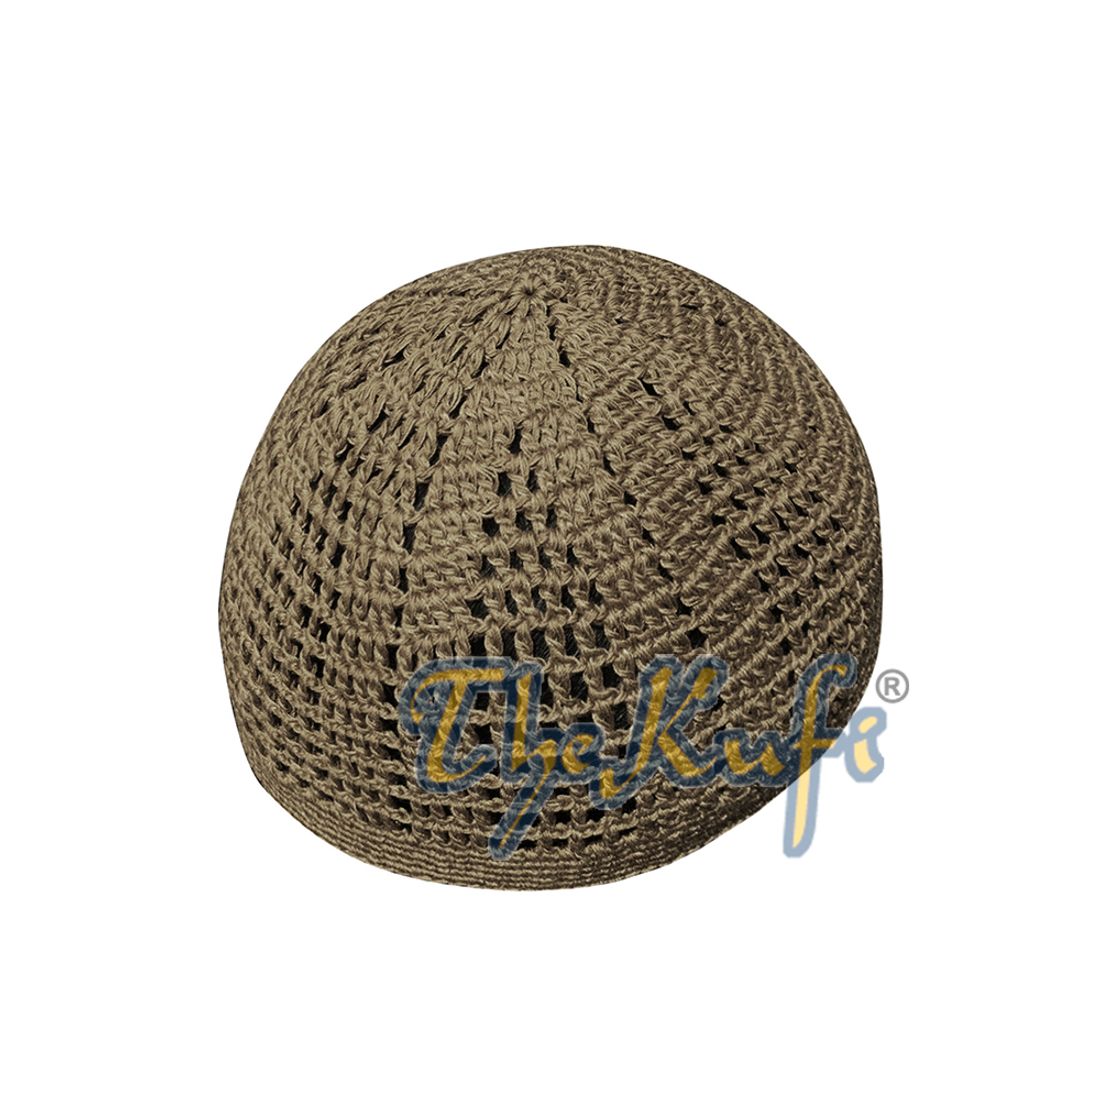 Skull Cap Kufi Cotton Brown Tight & Loose Weave Design Crochet Knit Head Cover